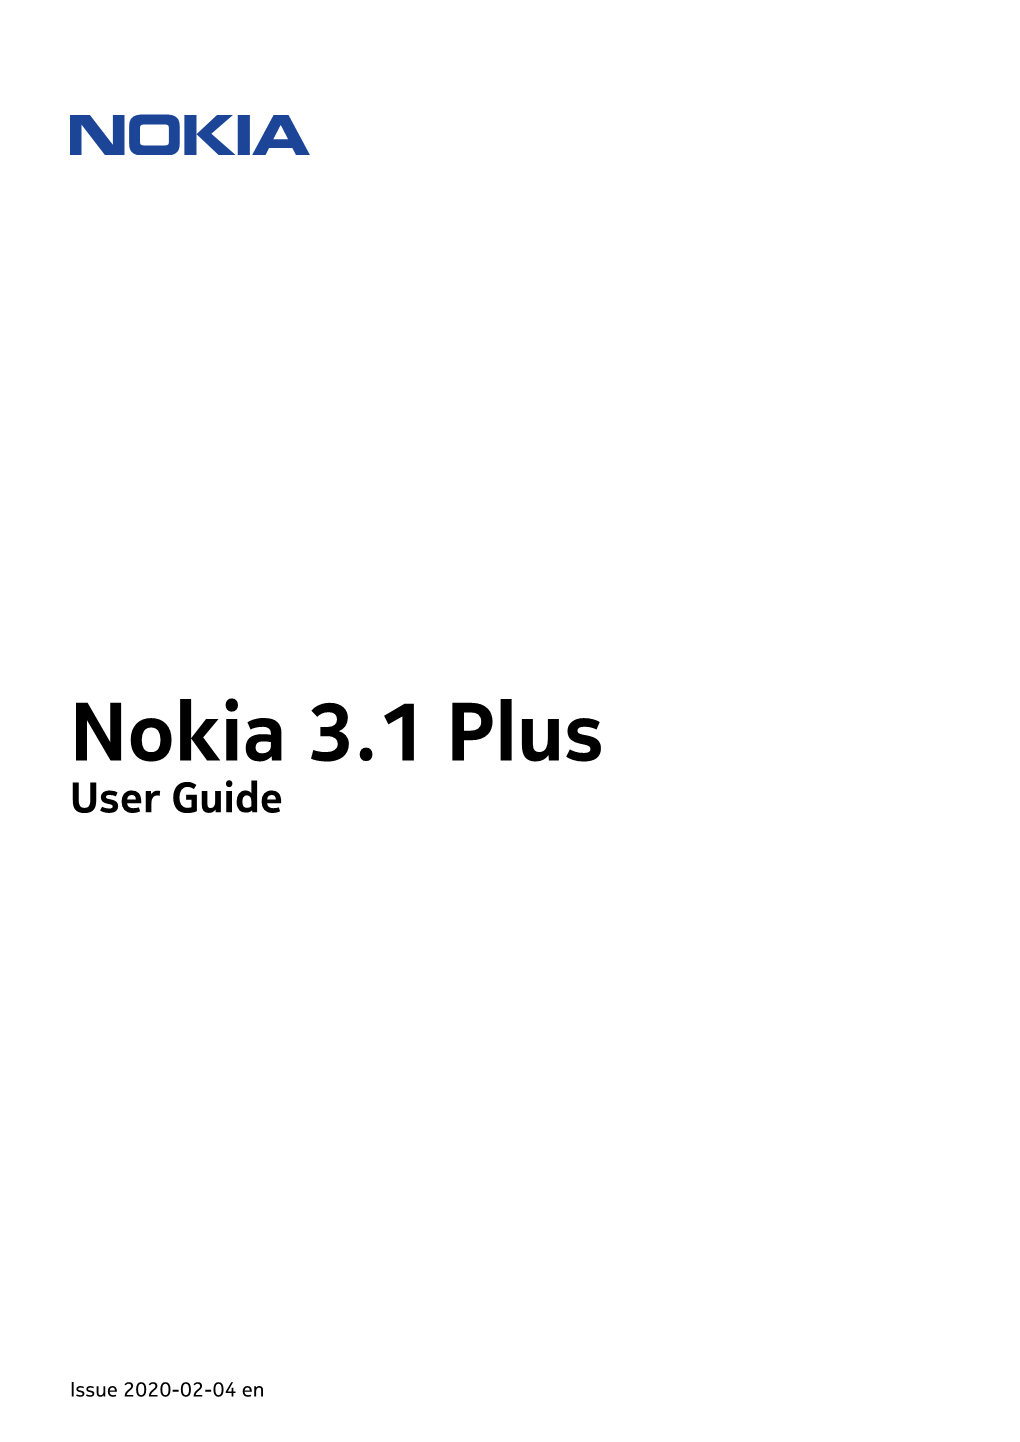 Nokia 3.1 Plus User Guide Pdfdisplaydoctitle=True Pdflang=En